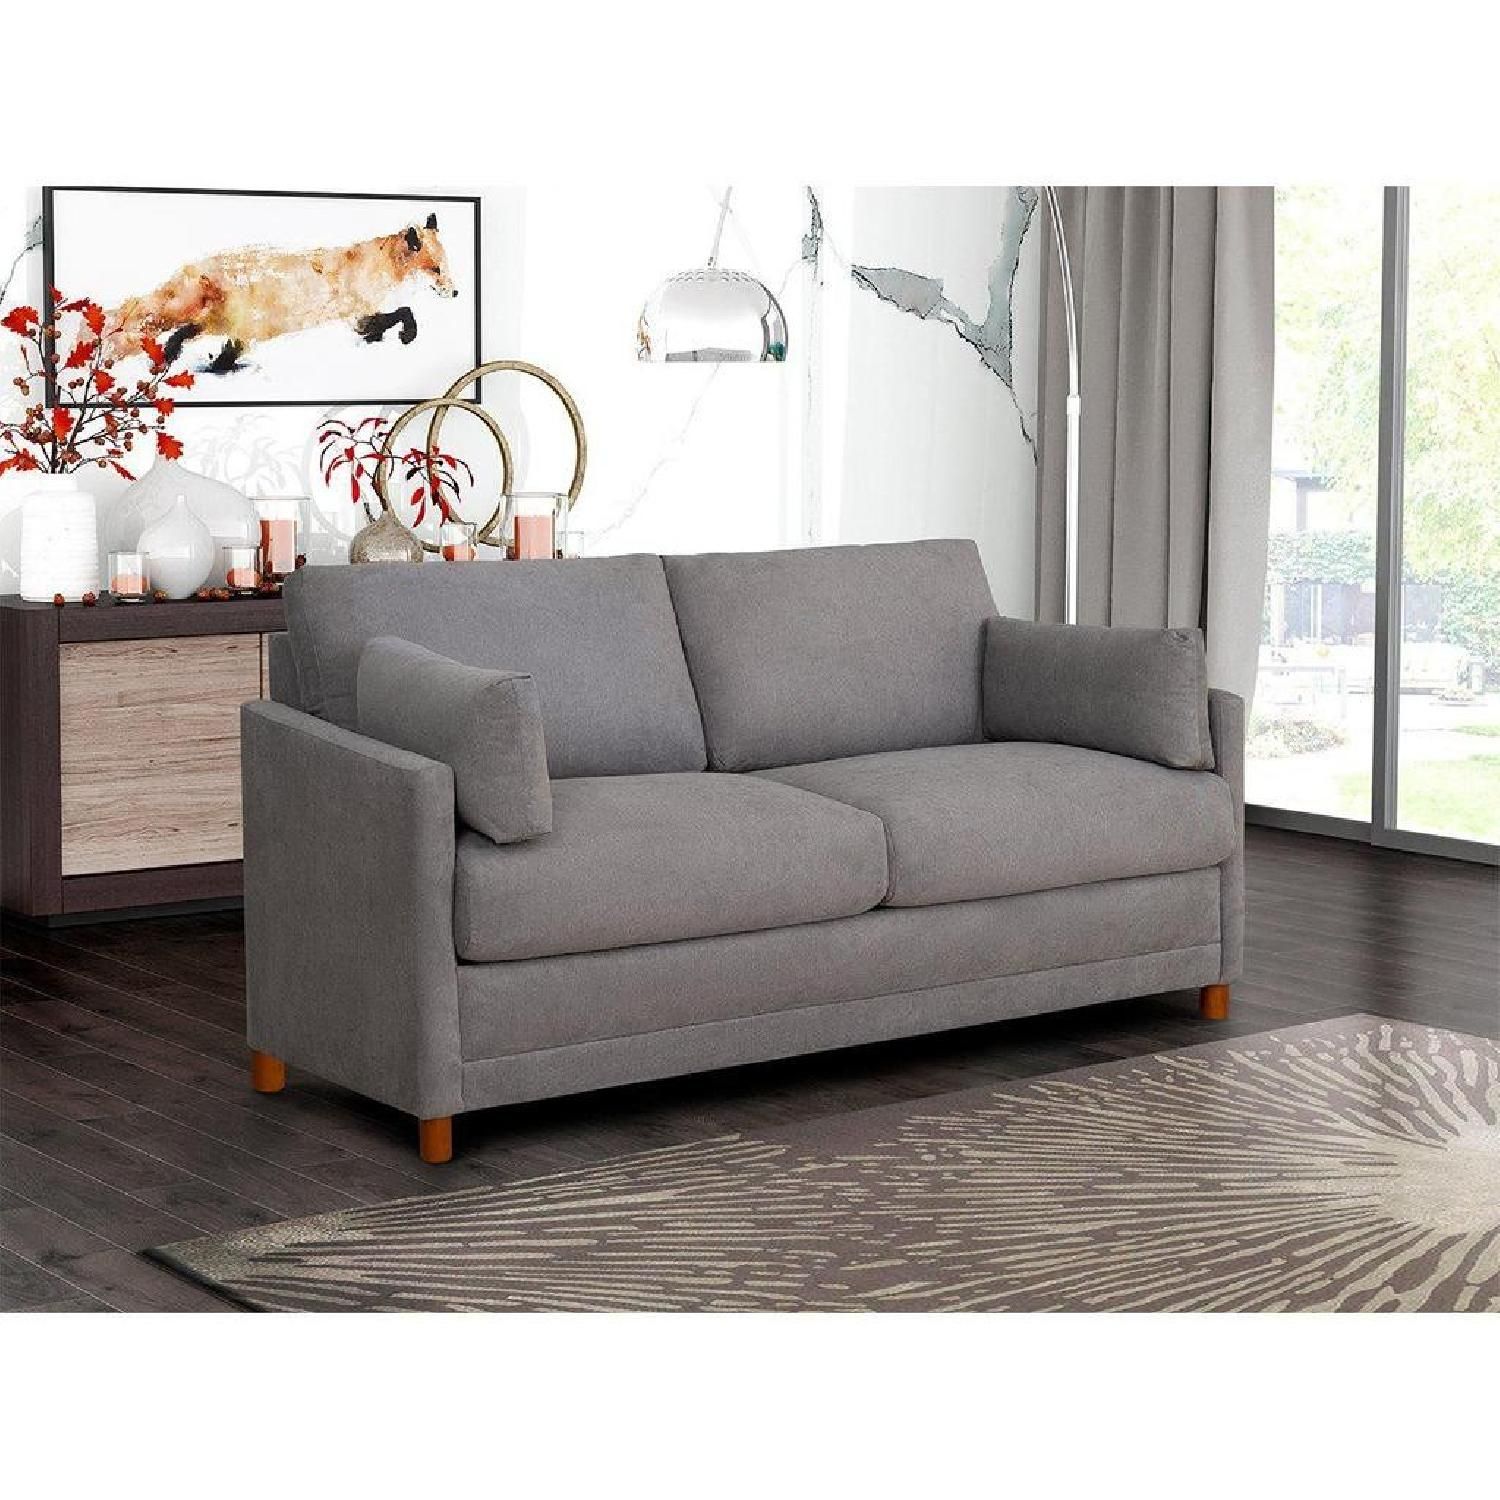 Jennifer Convertibles Modern Full Sleeper Sofa In Grey – Aptdeco In Convertible Gray Loveseat Sleepers (Gallery 7 of 20)